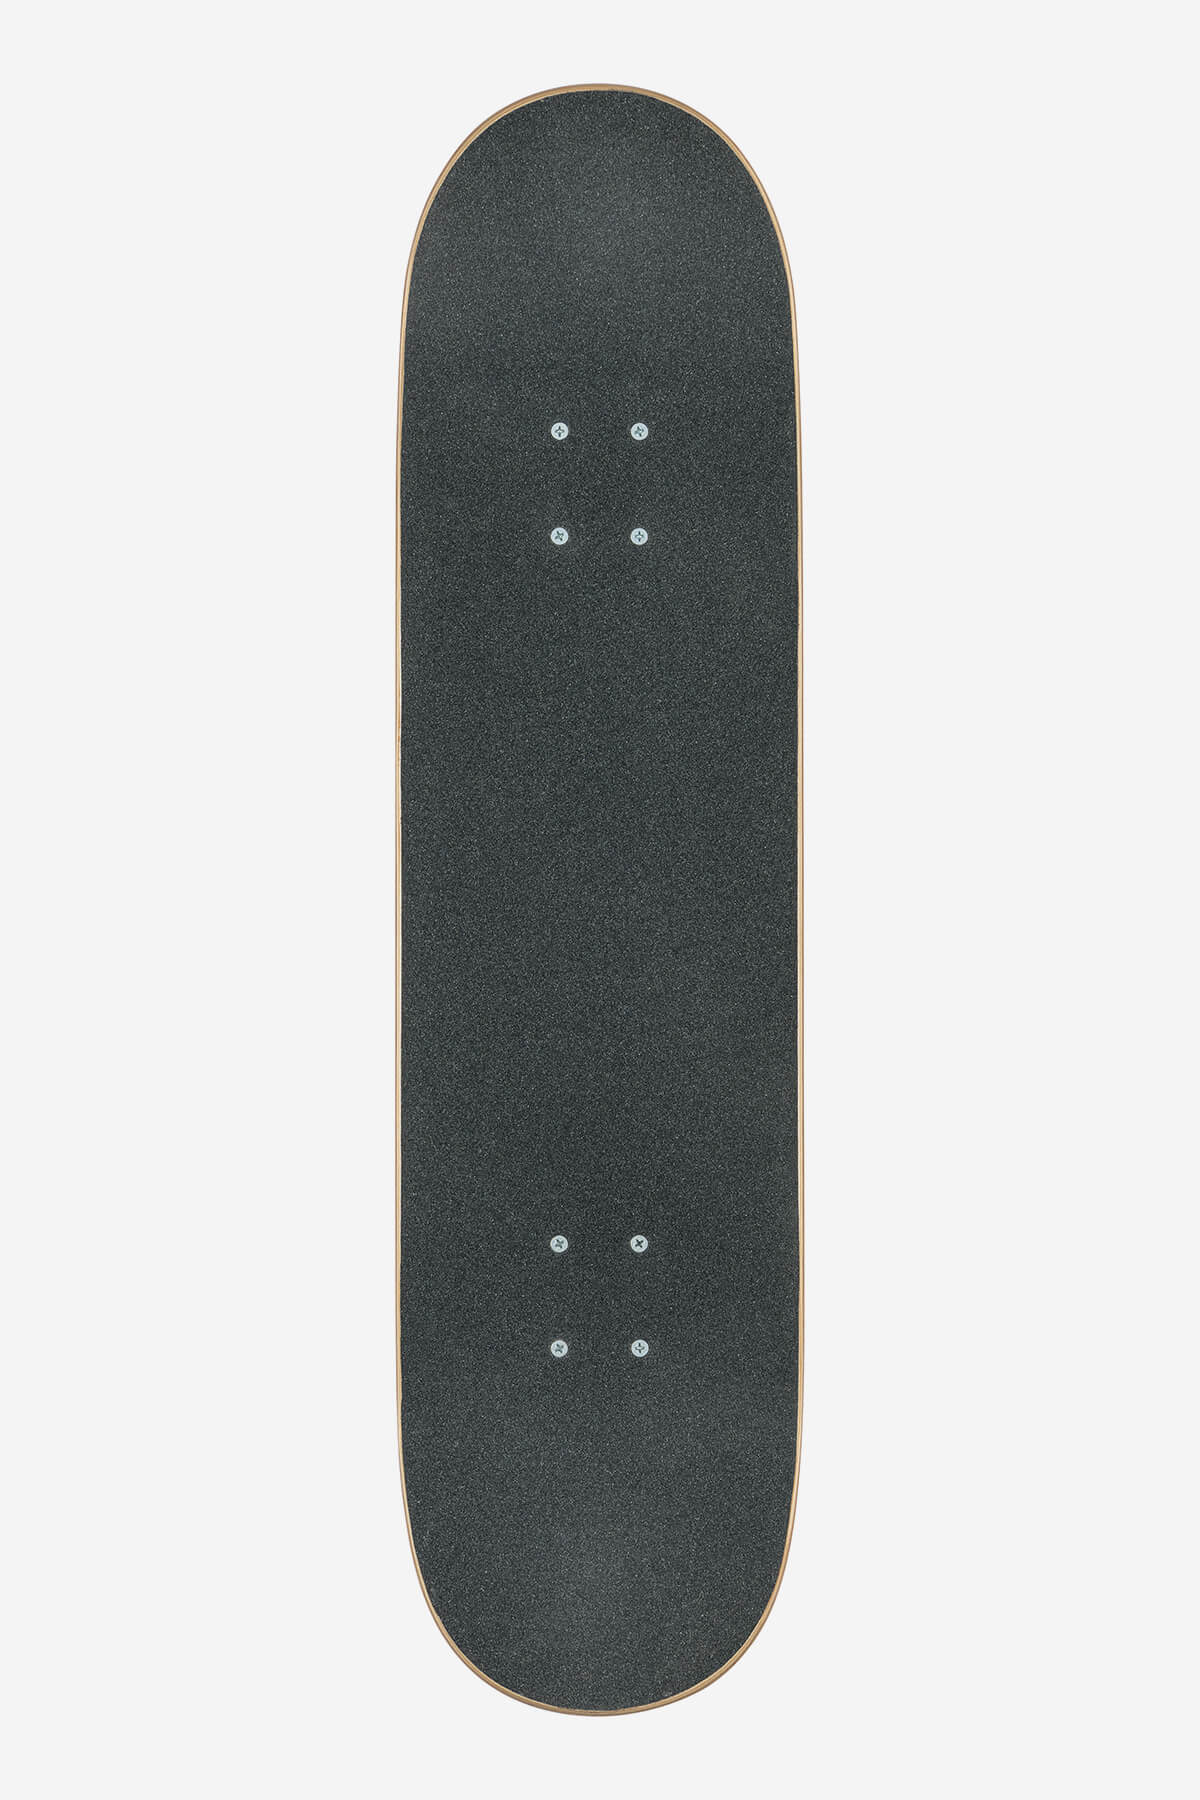 Globe - G0 Fubar - Red/White - 8.25" Completo Skateboard